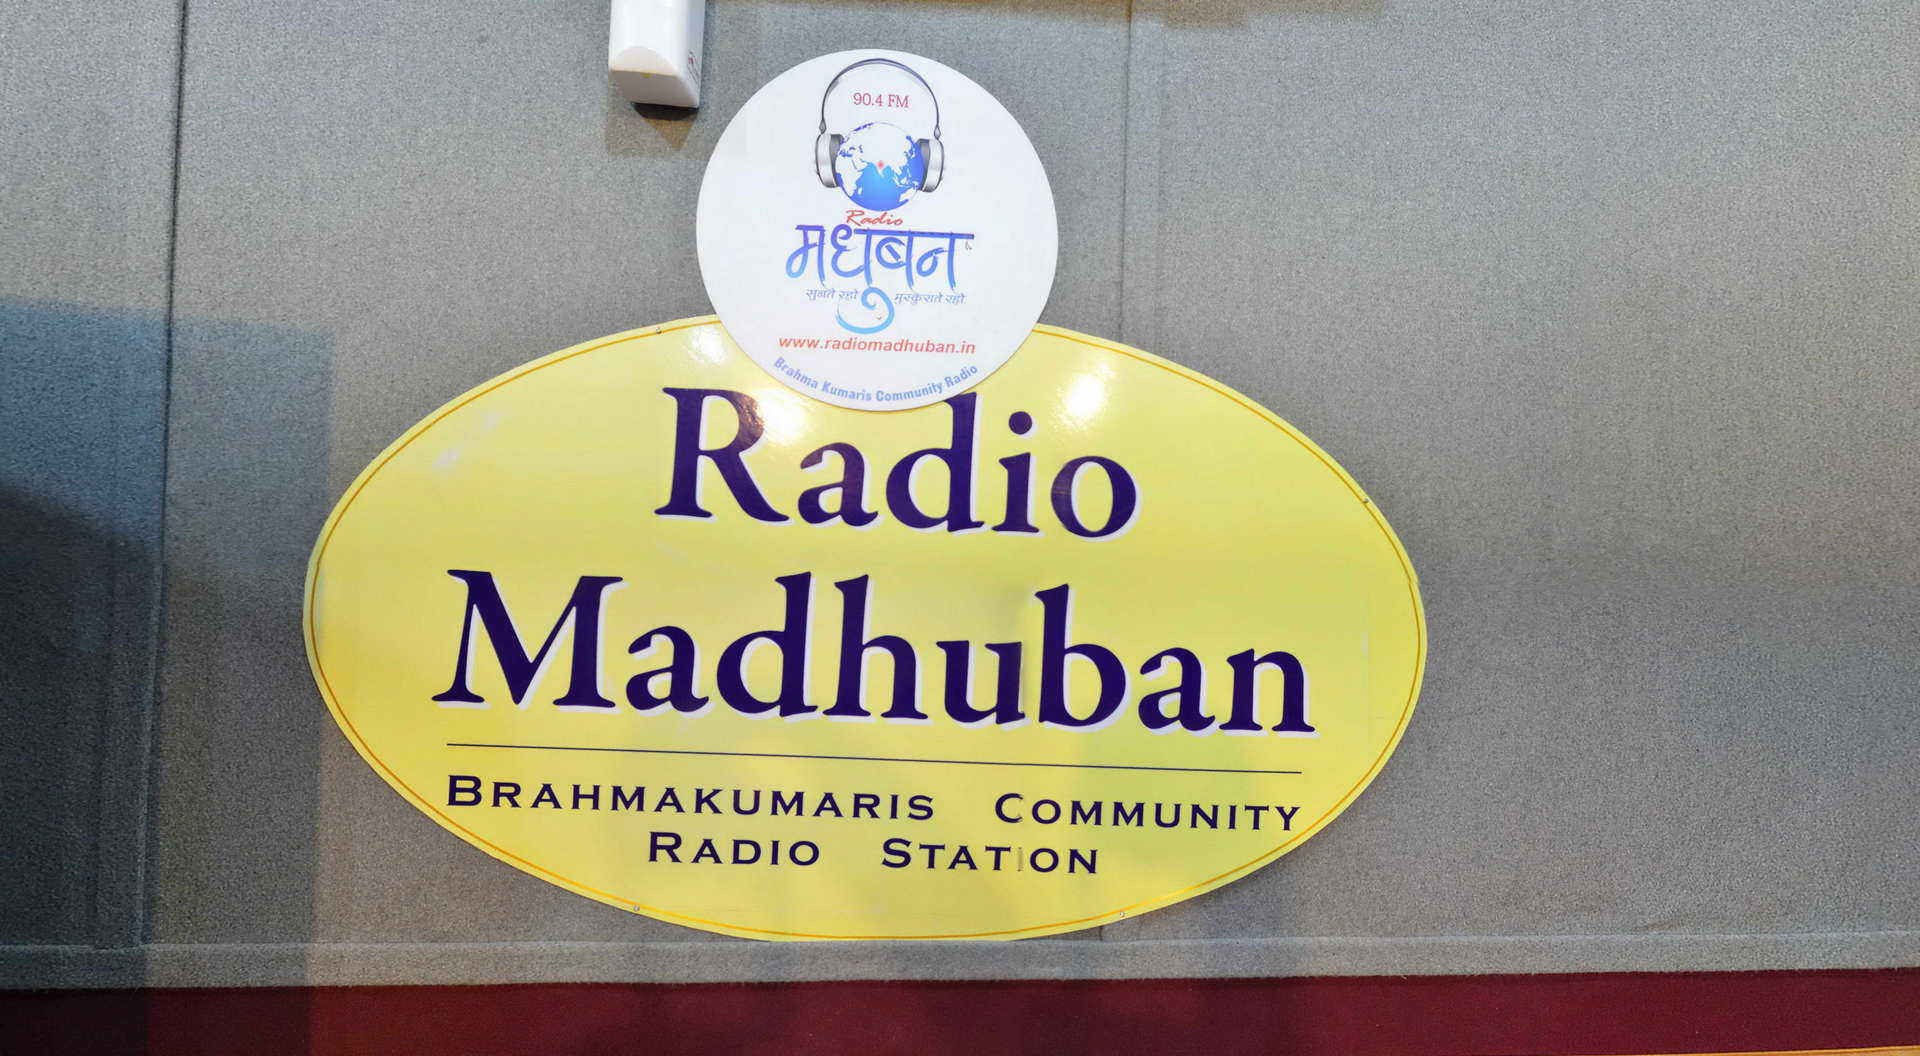 Radio madhuban studio